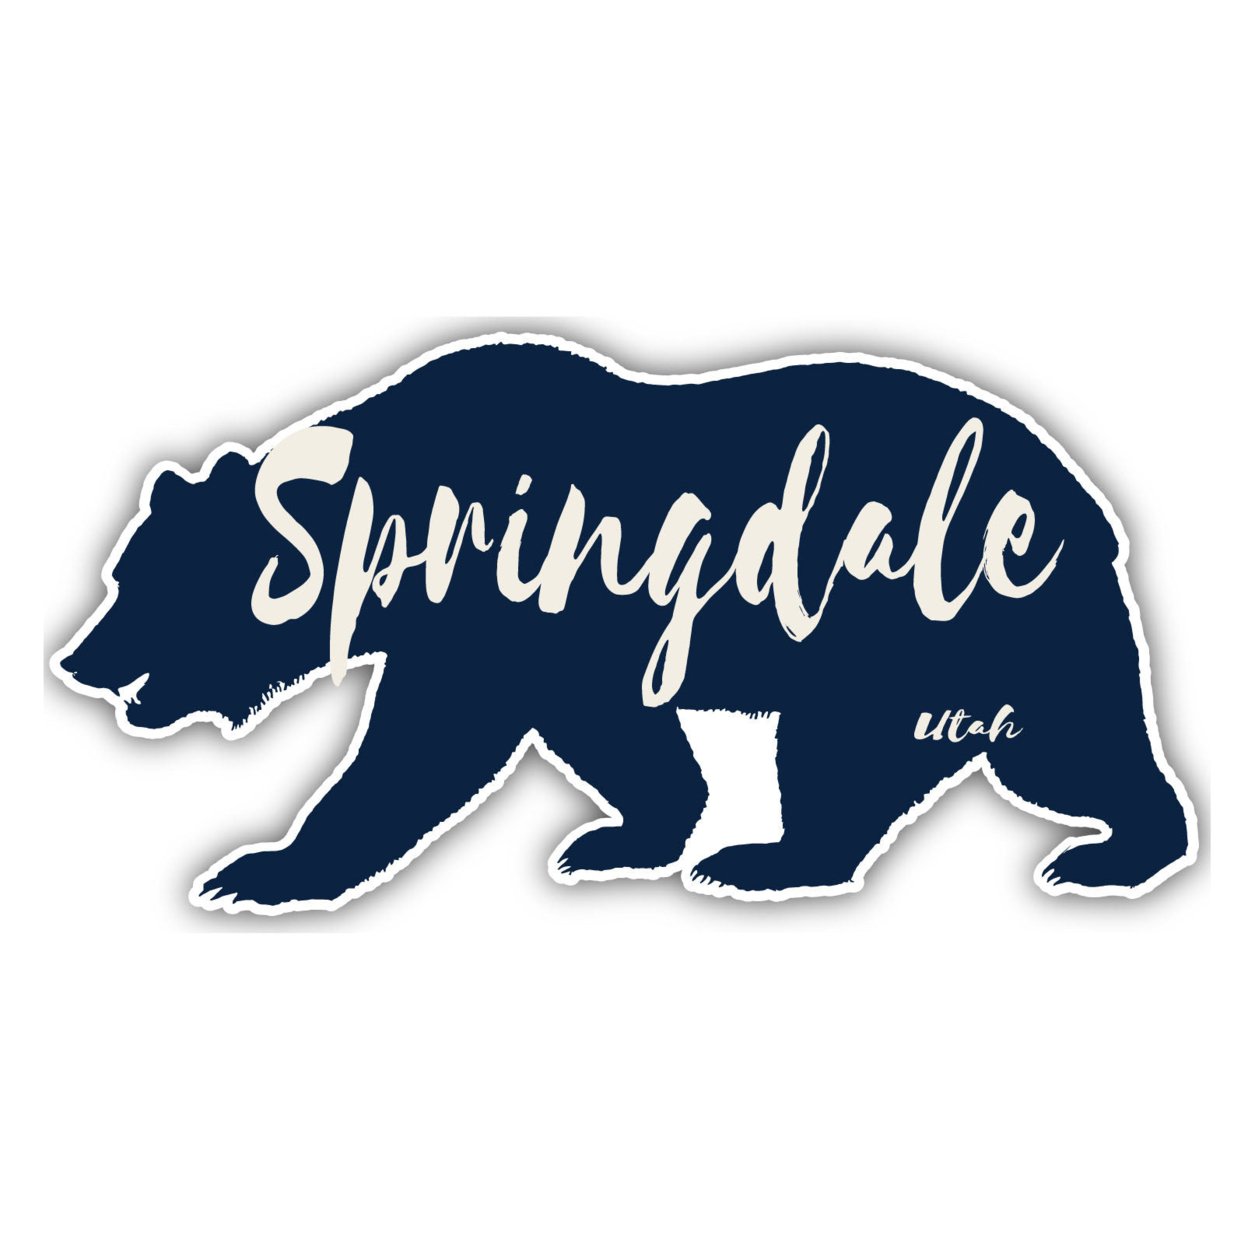 Springdale Utah Souvenir Decorative Stickers (Choose Theme And Size) - Single Unit, 4-Inch, Bear